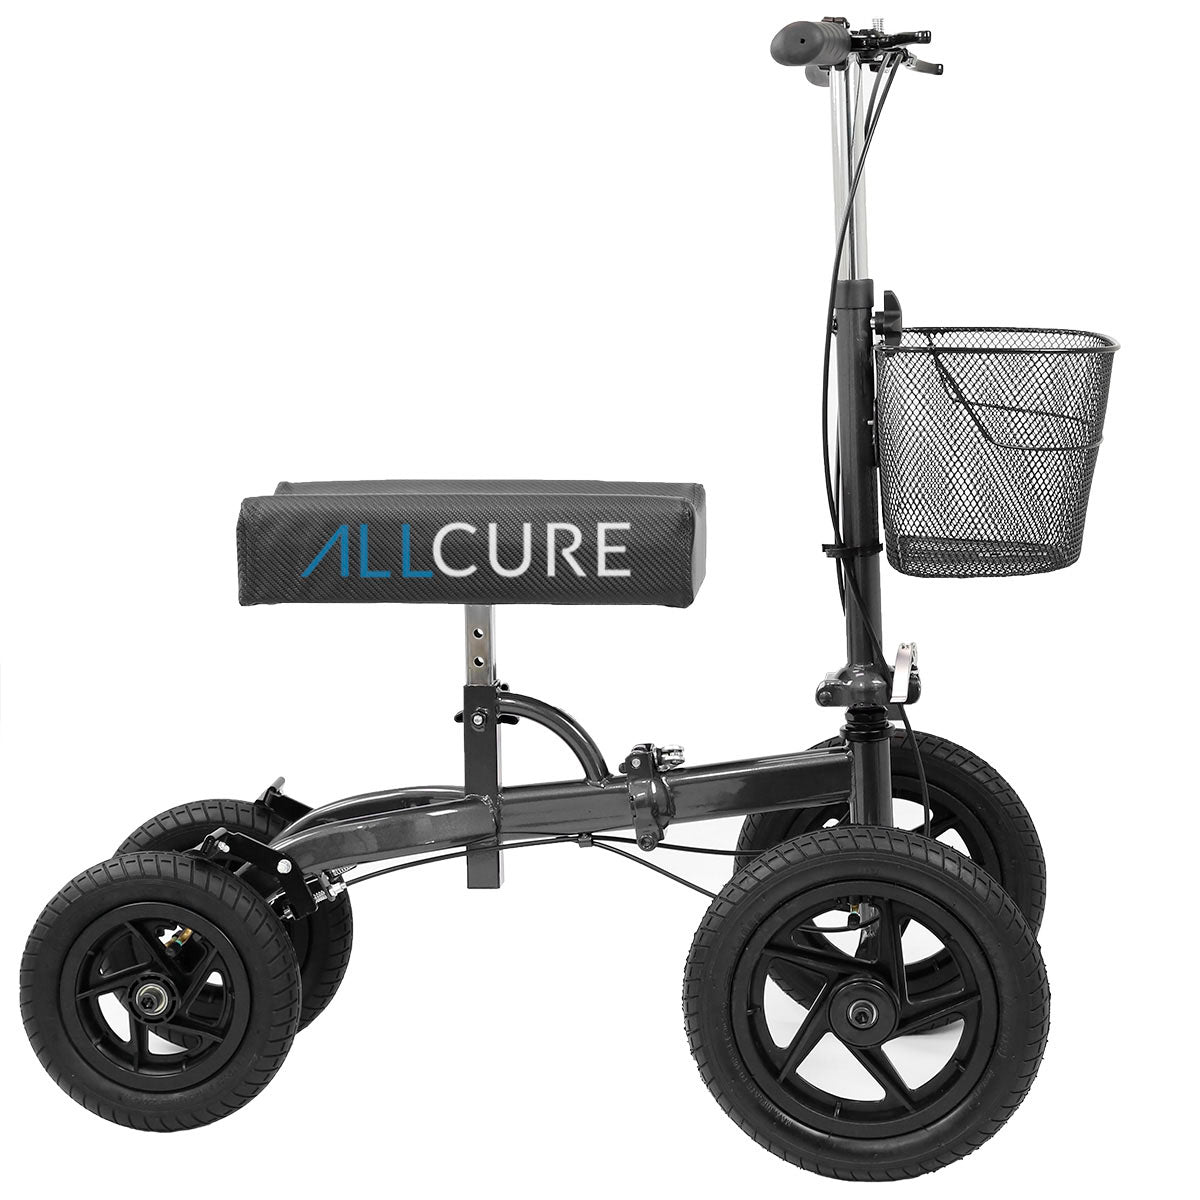 AllCure All Terrain Foldable Knee Medical Crosslinks Scooter Roller, – Black Walker